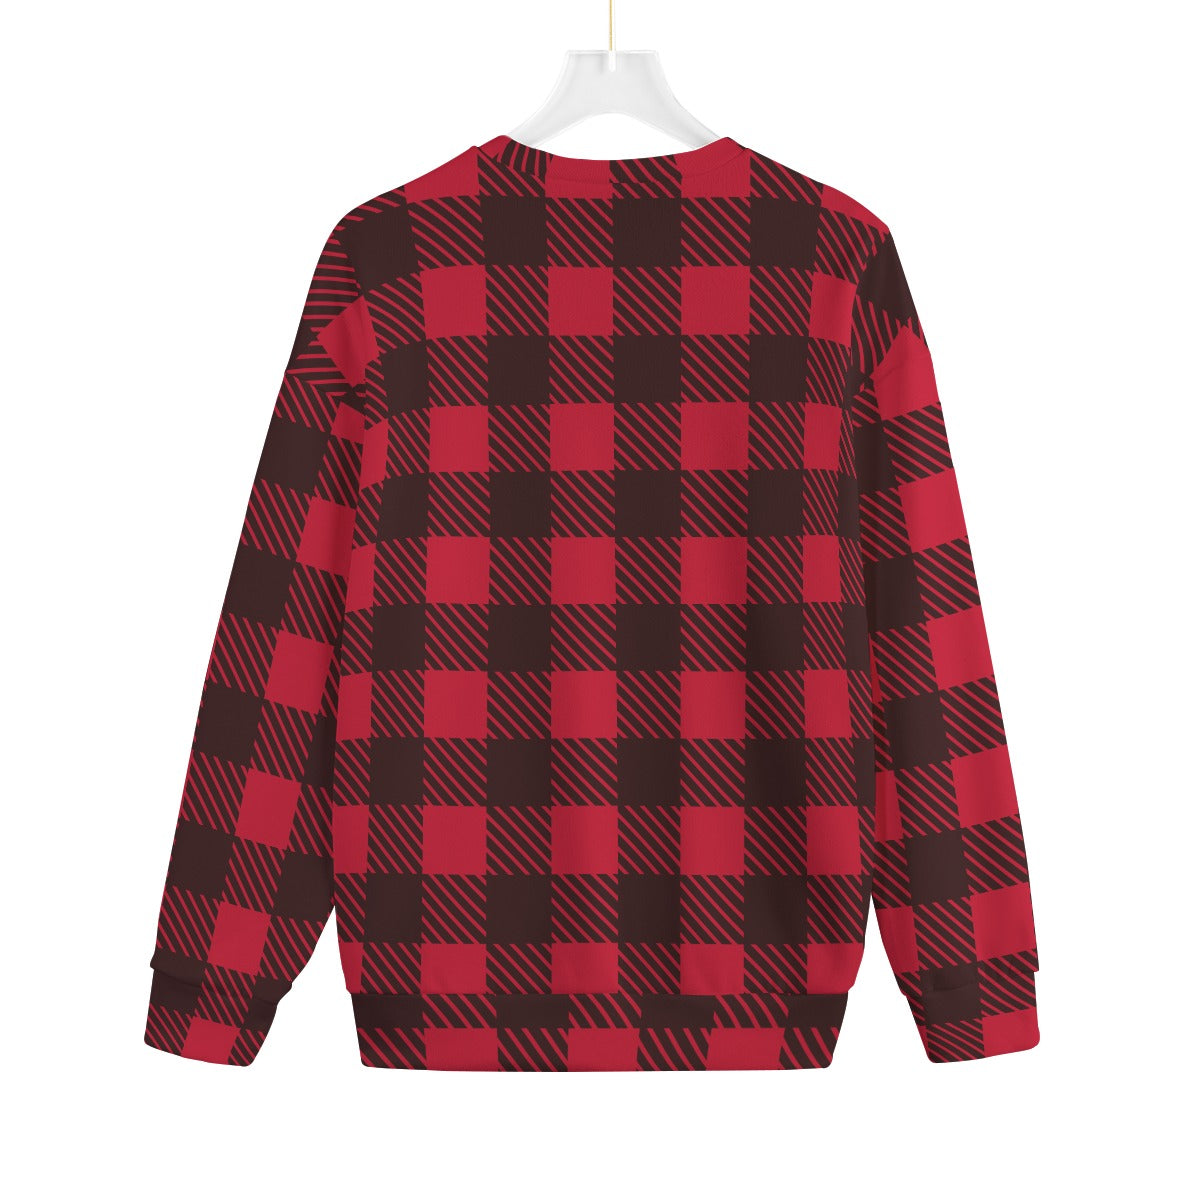 All-Over Print Unisex Drop-shoulder Knitted Fleece Sweater